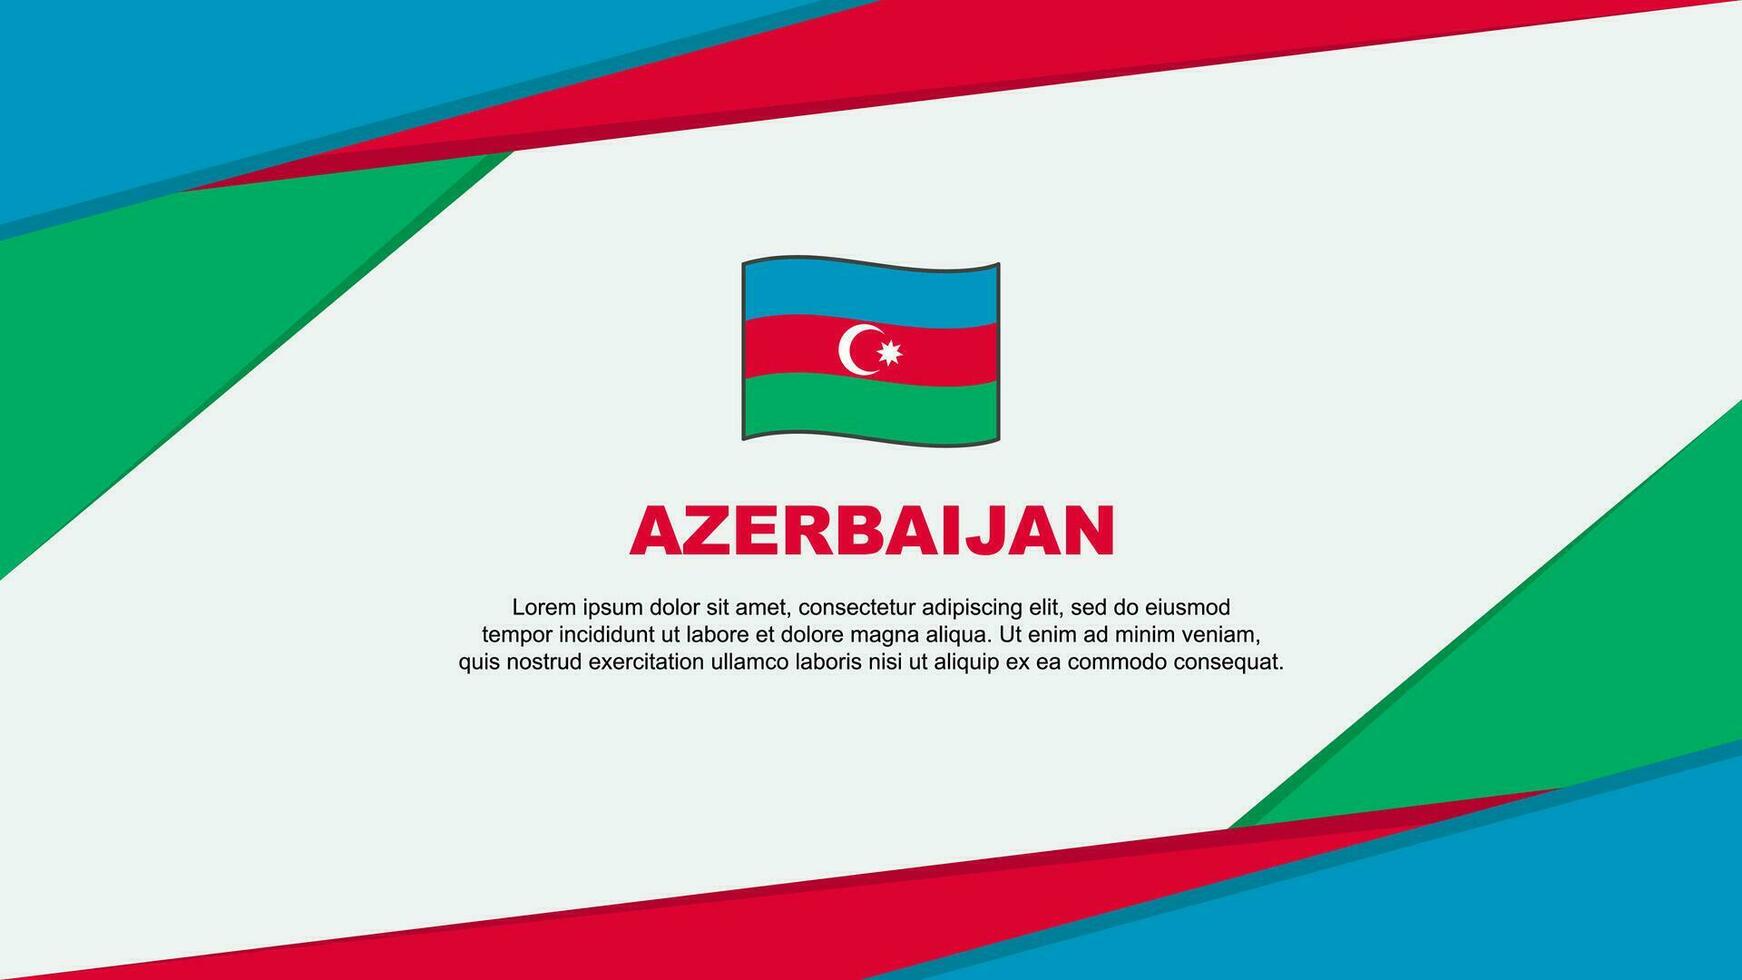 Azerbaijan Flag Abstract Background Design Template. Azerbaijan Independence Day Banner Cartoon Vector Illustration. Azerbaijan